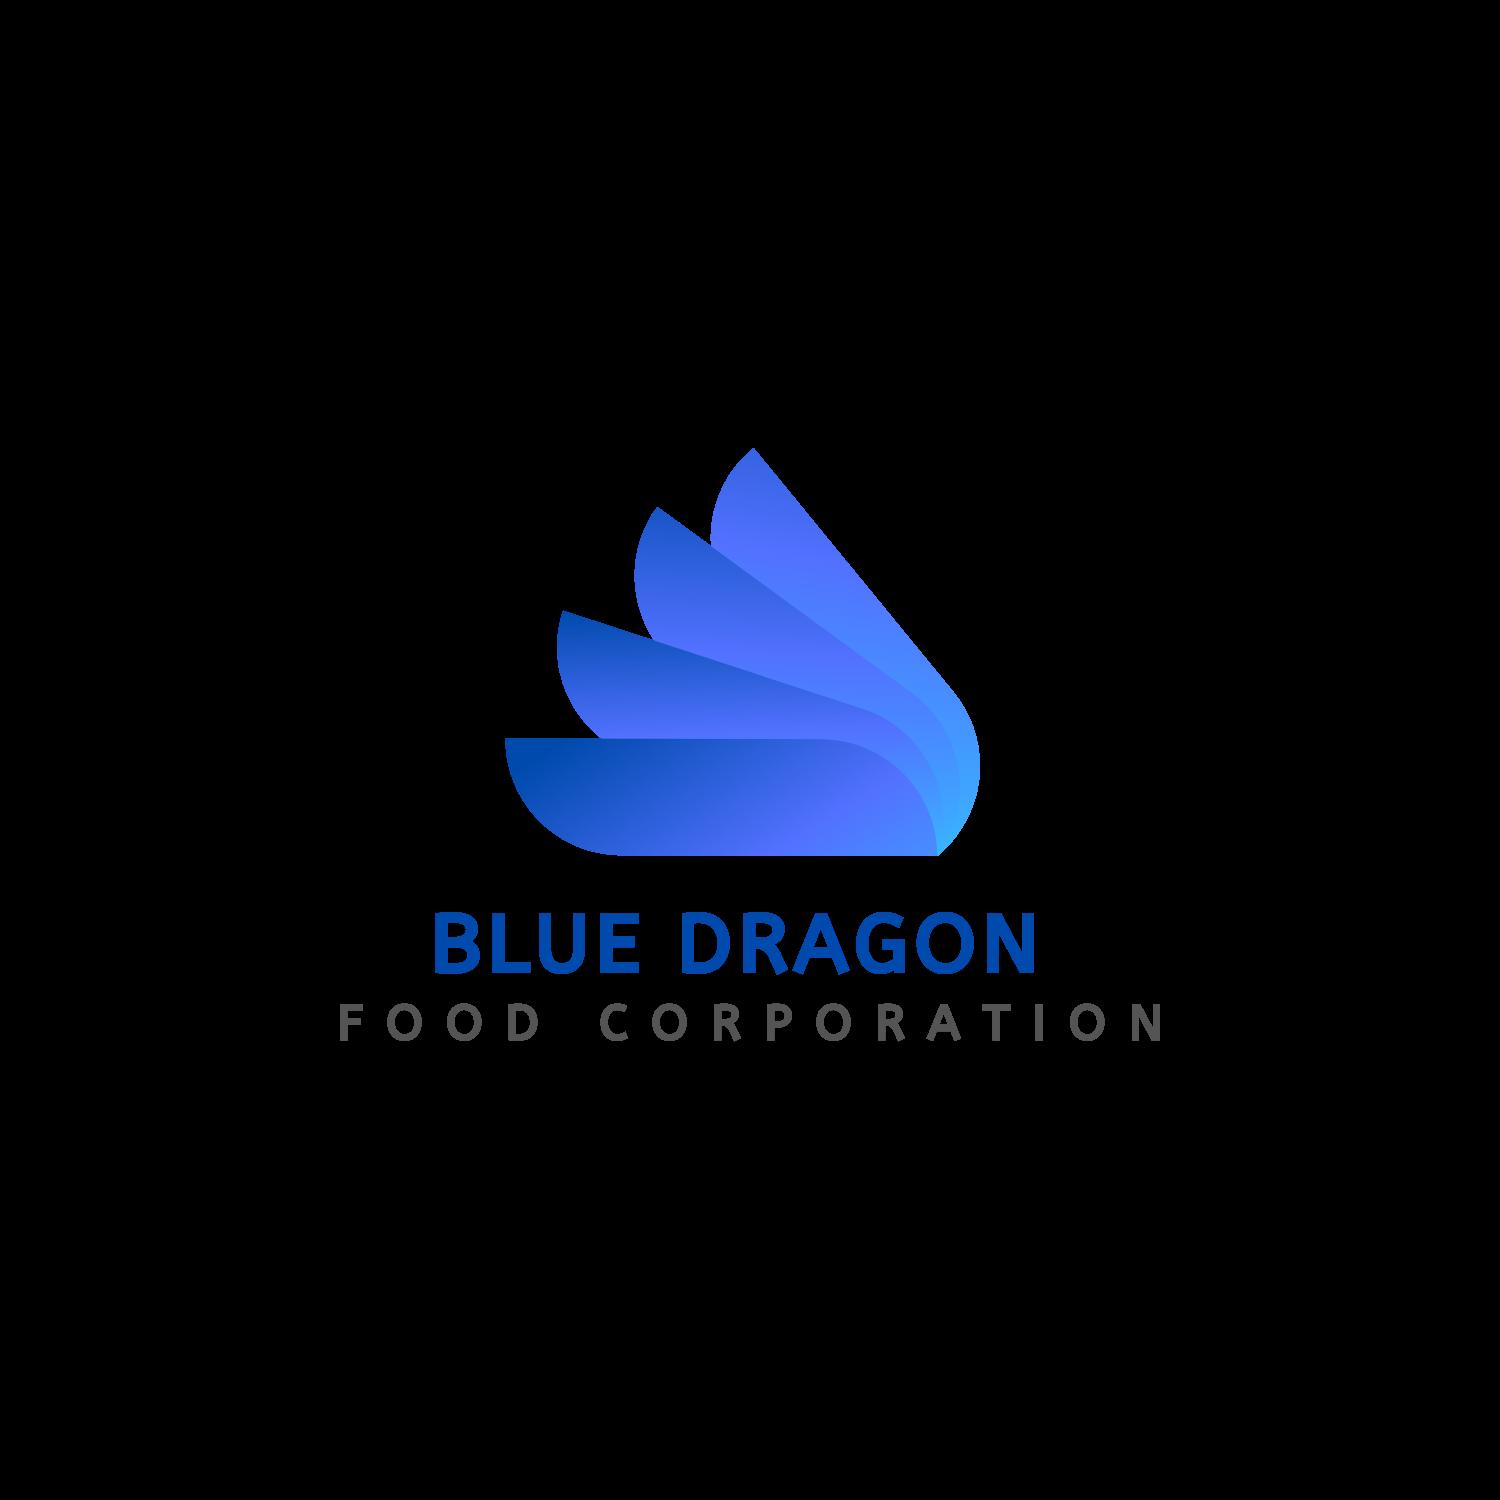 BLUE DRAGON FOOD CORPORATION